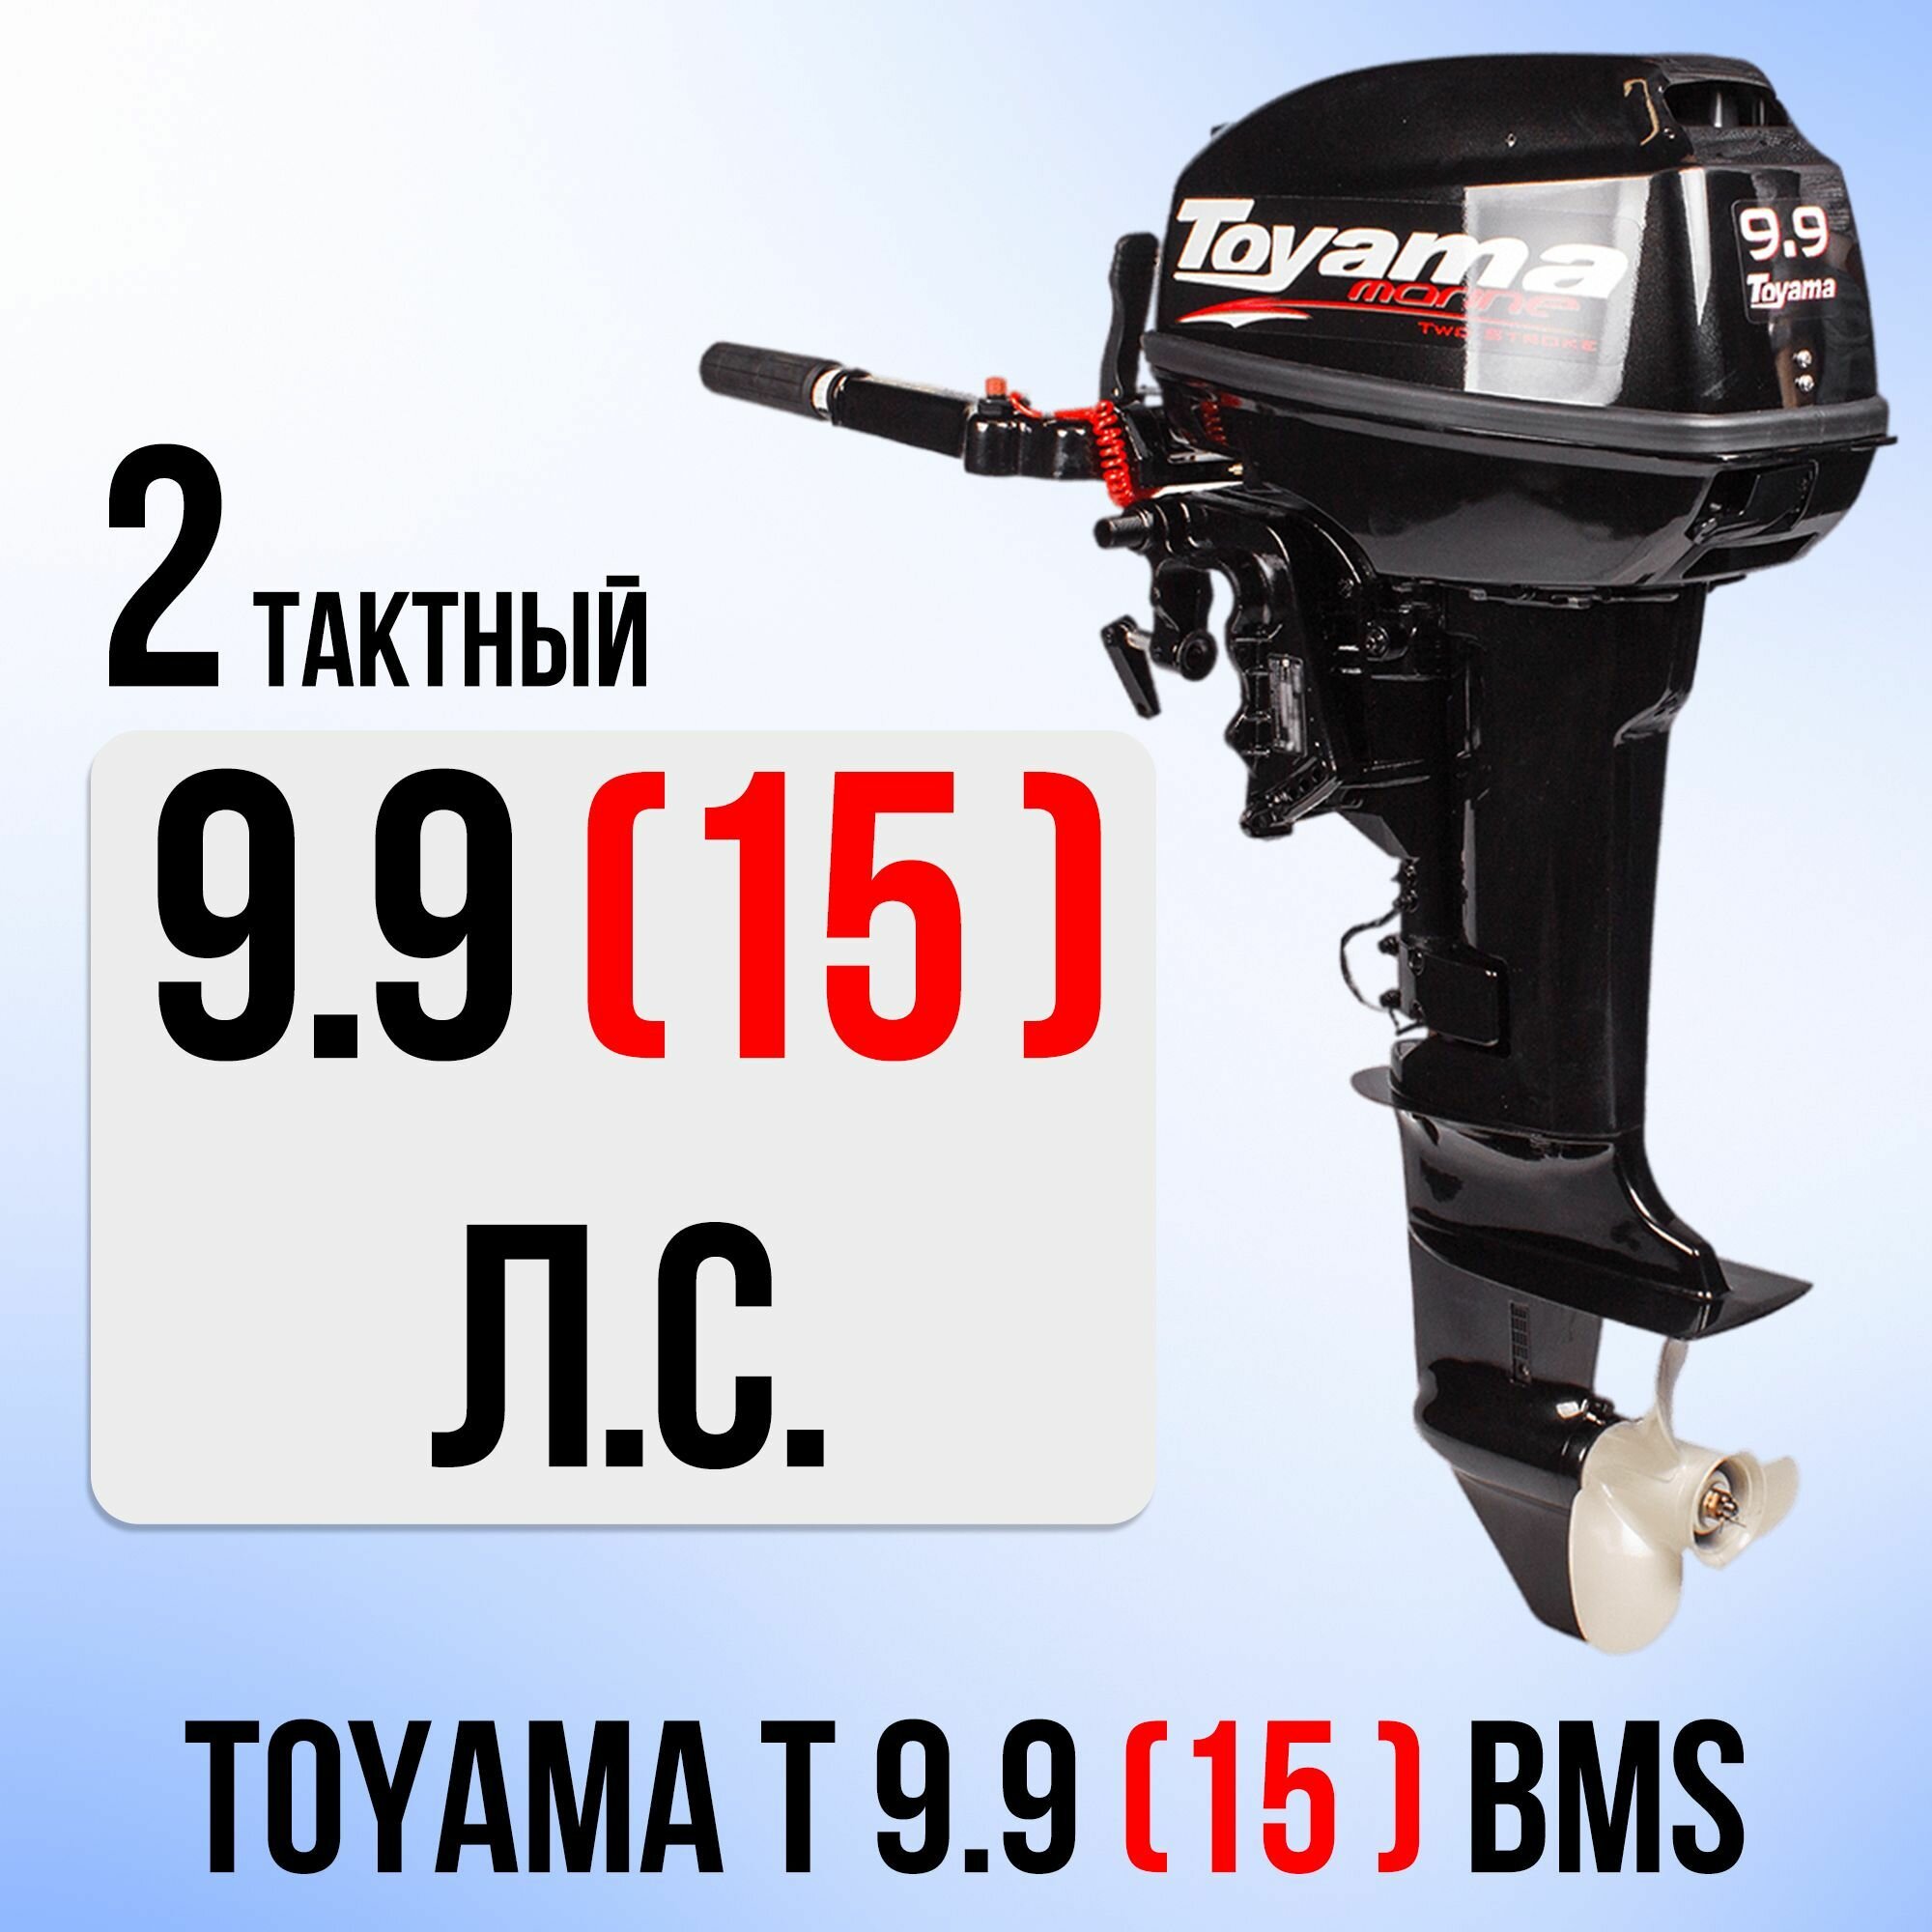 Бензиновый лодочный мотор Toyama T9.9 (15) BMS (завод PARSUN) 2-х тактный